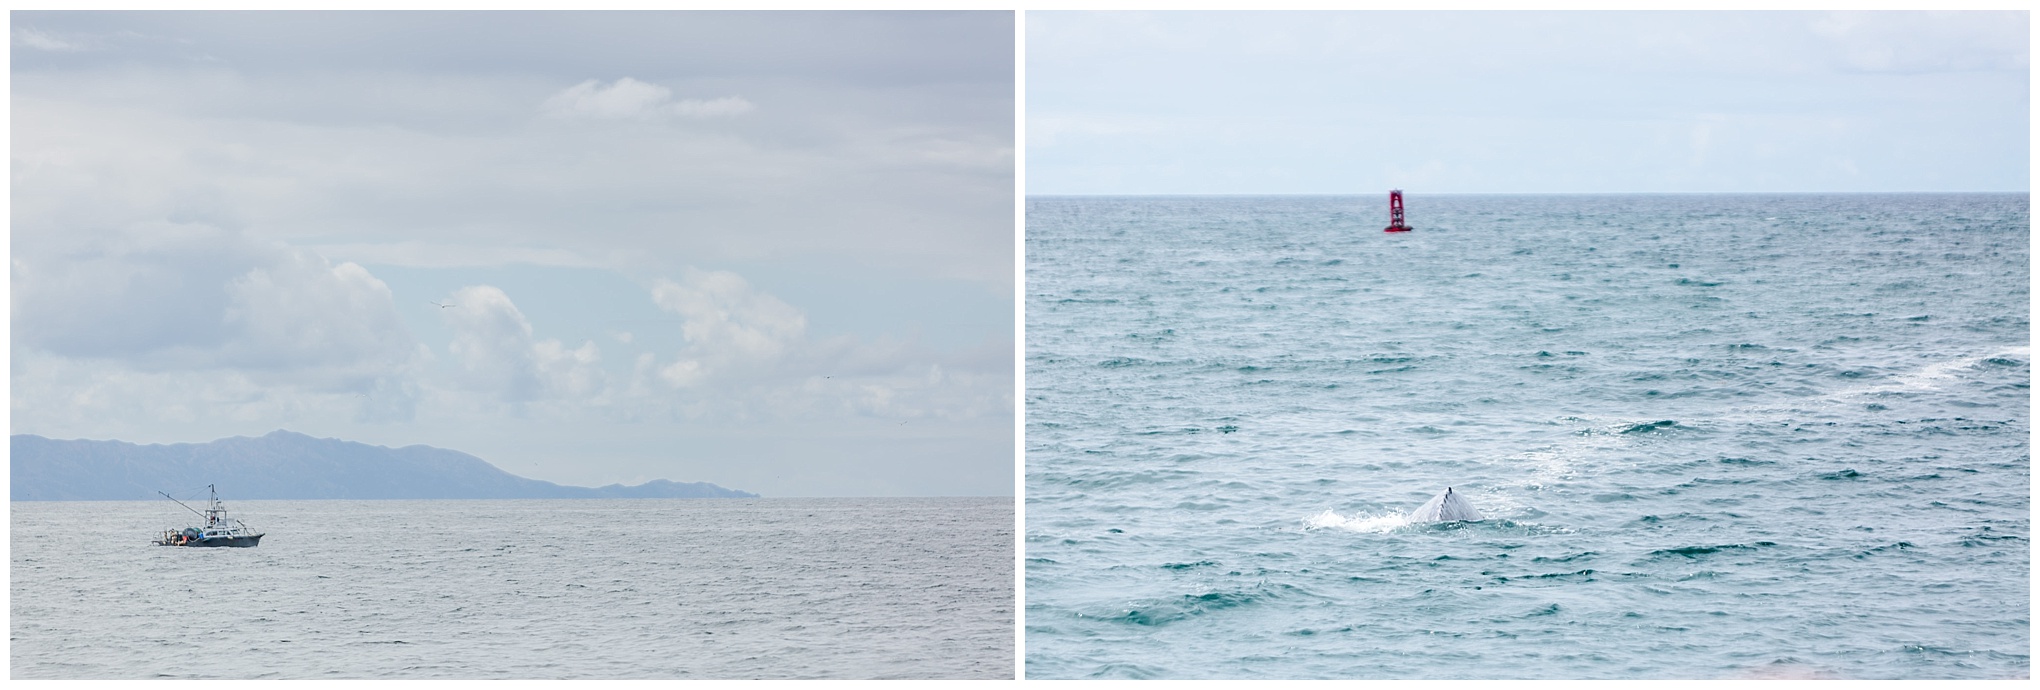 Pacific Ocean, sail boat, sailing, Long Beach, California, blue water, buoy, something fresh